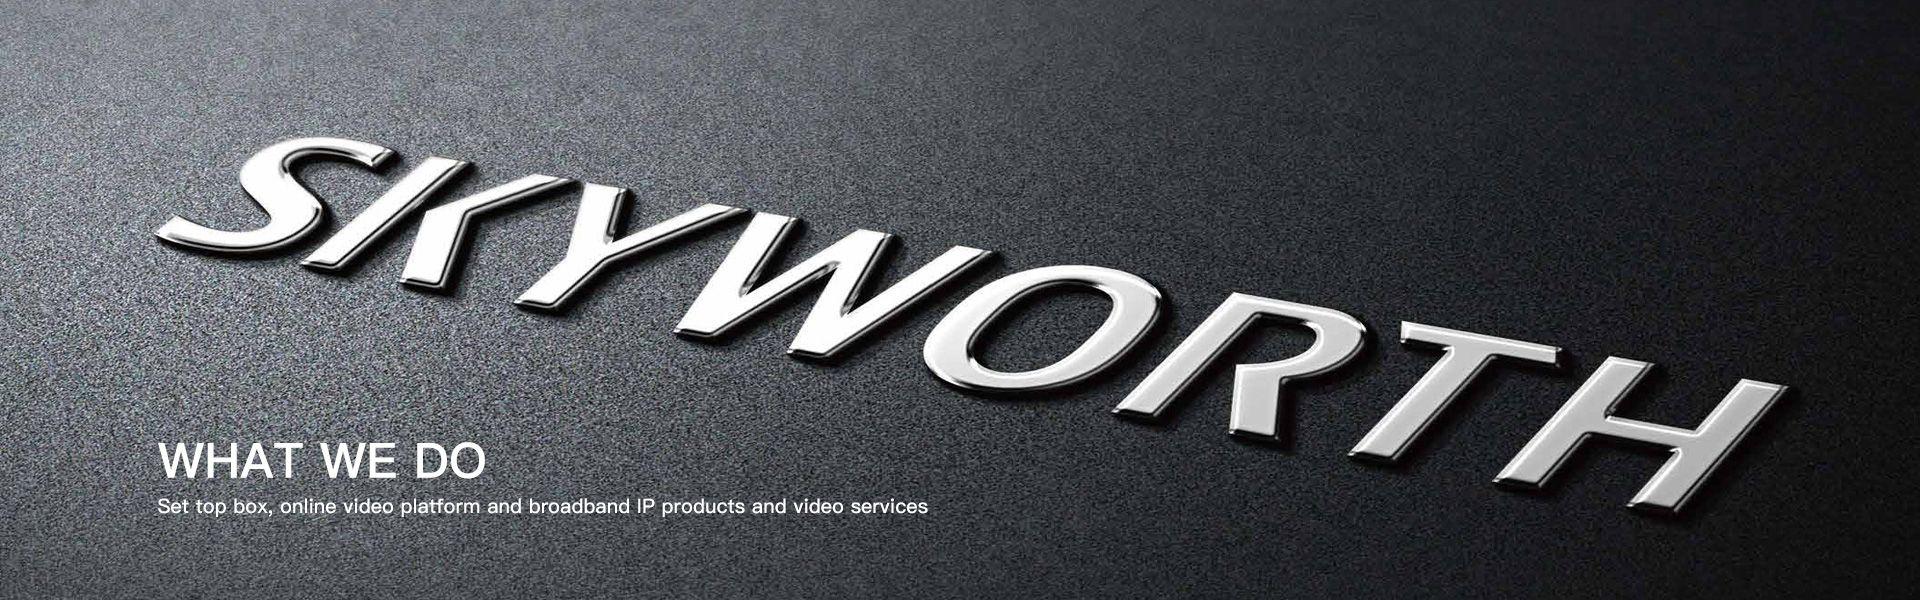 Skyworth Logo - Home, Skyworth Digital